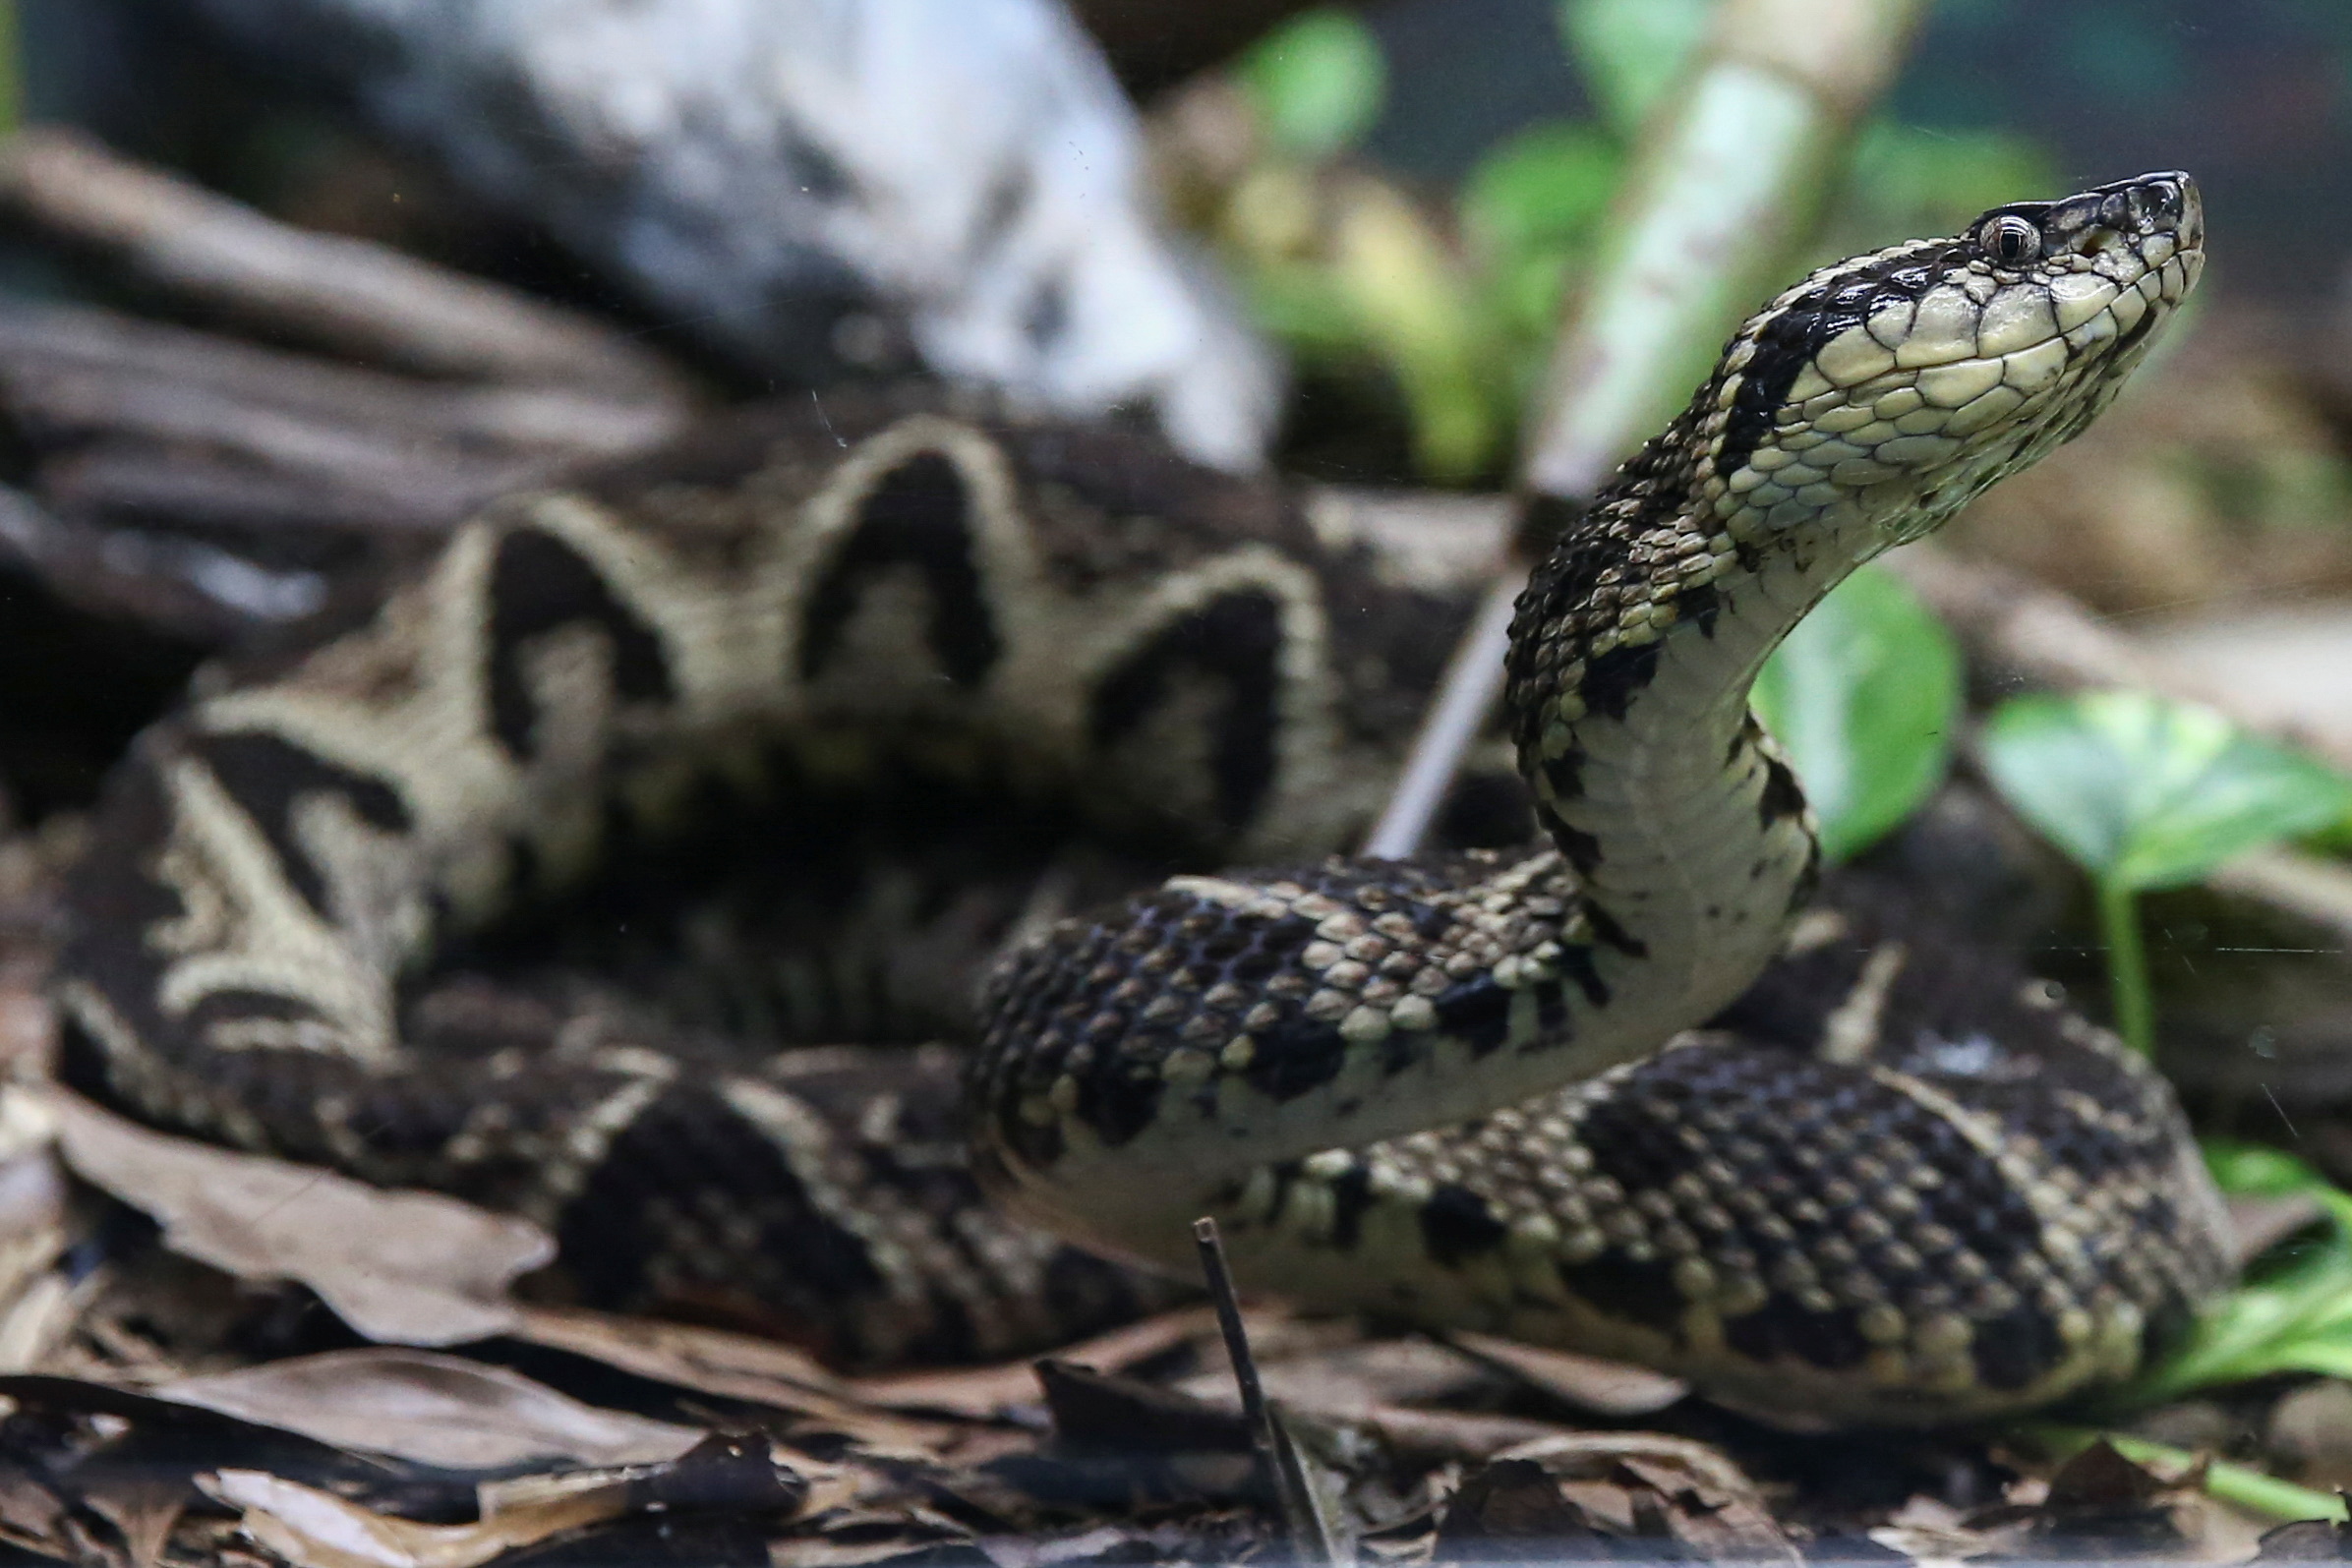 Brazilian study uses snake venom against COVID-19 in Sao Paulo